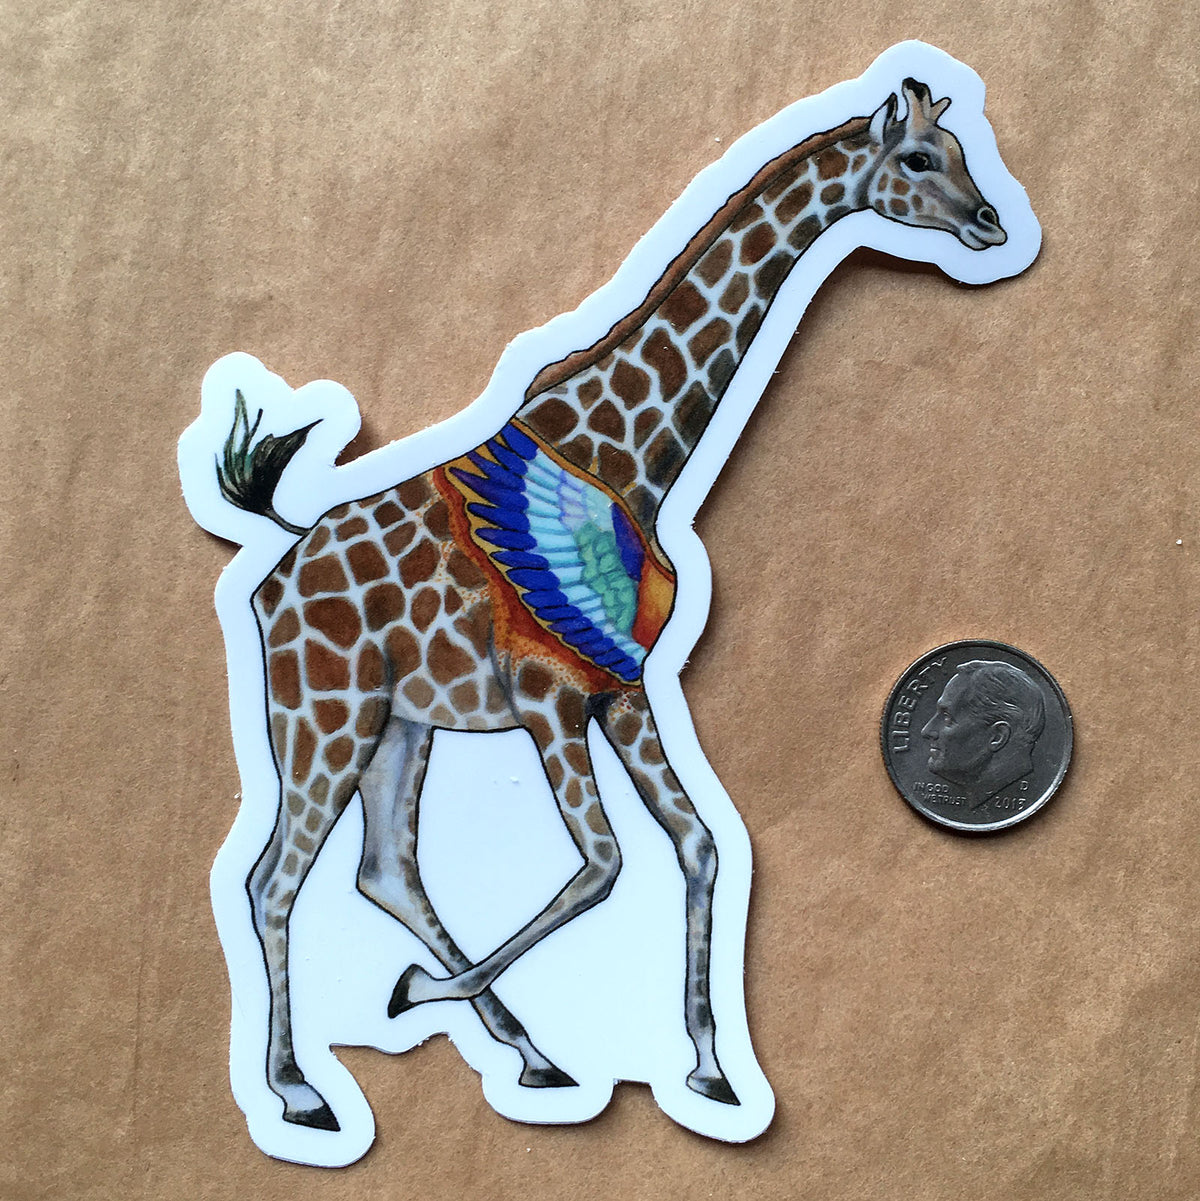 Giraffe #1 Sticker - Wholesale